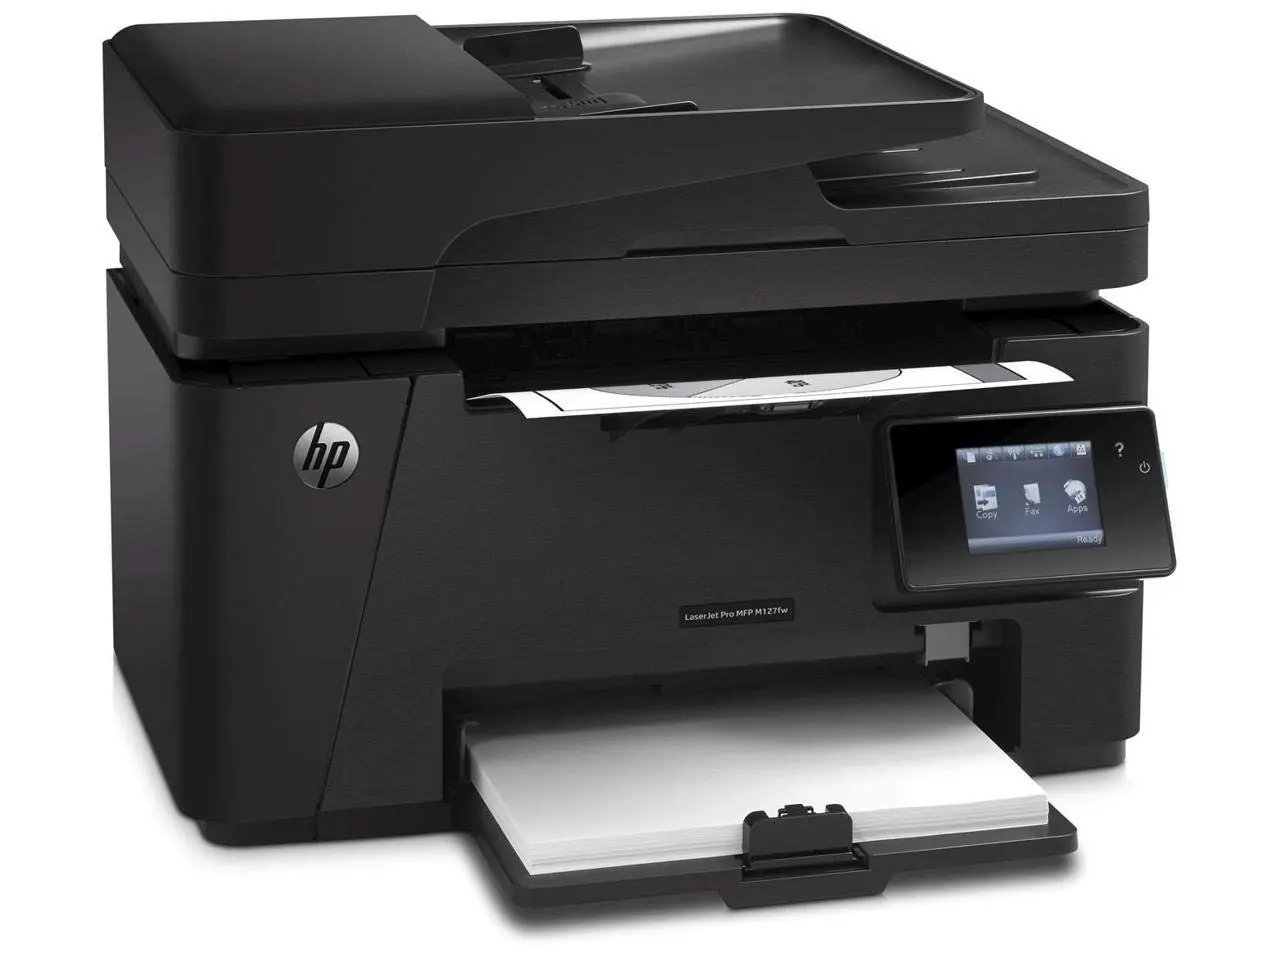 hewlett packard printer - How do I fix my HP printer failure